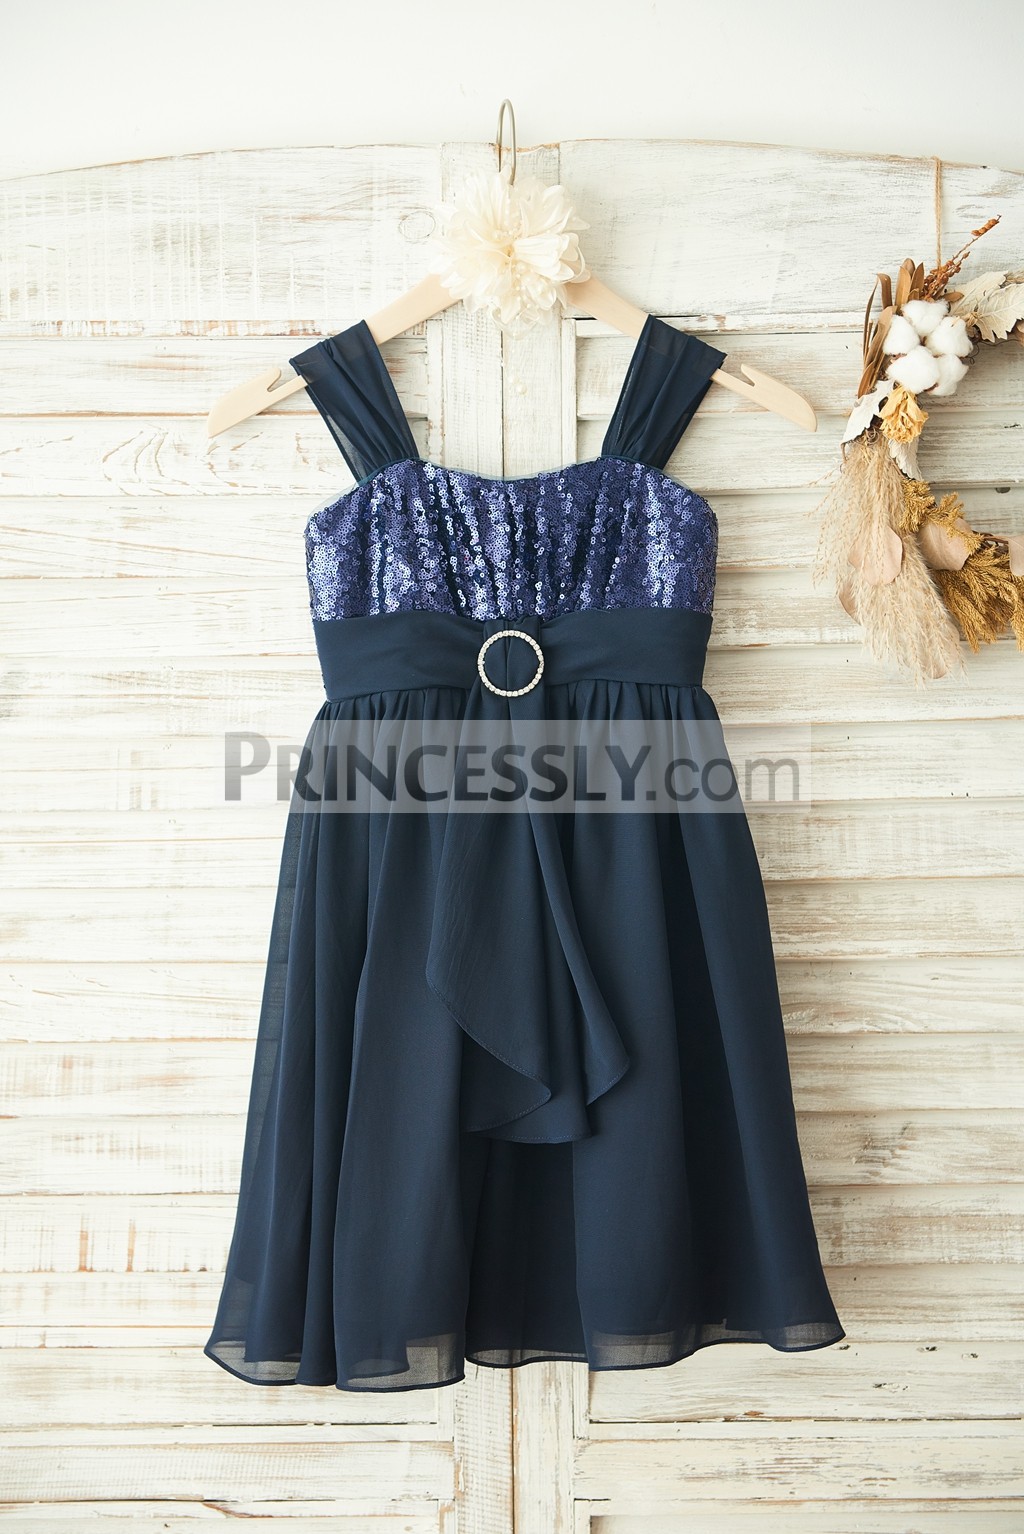 Boho Navy Blue Sequins Chiffon Overlay Flower Girl Dress